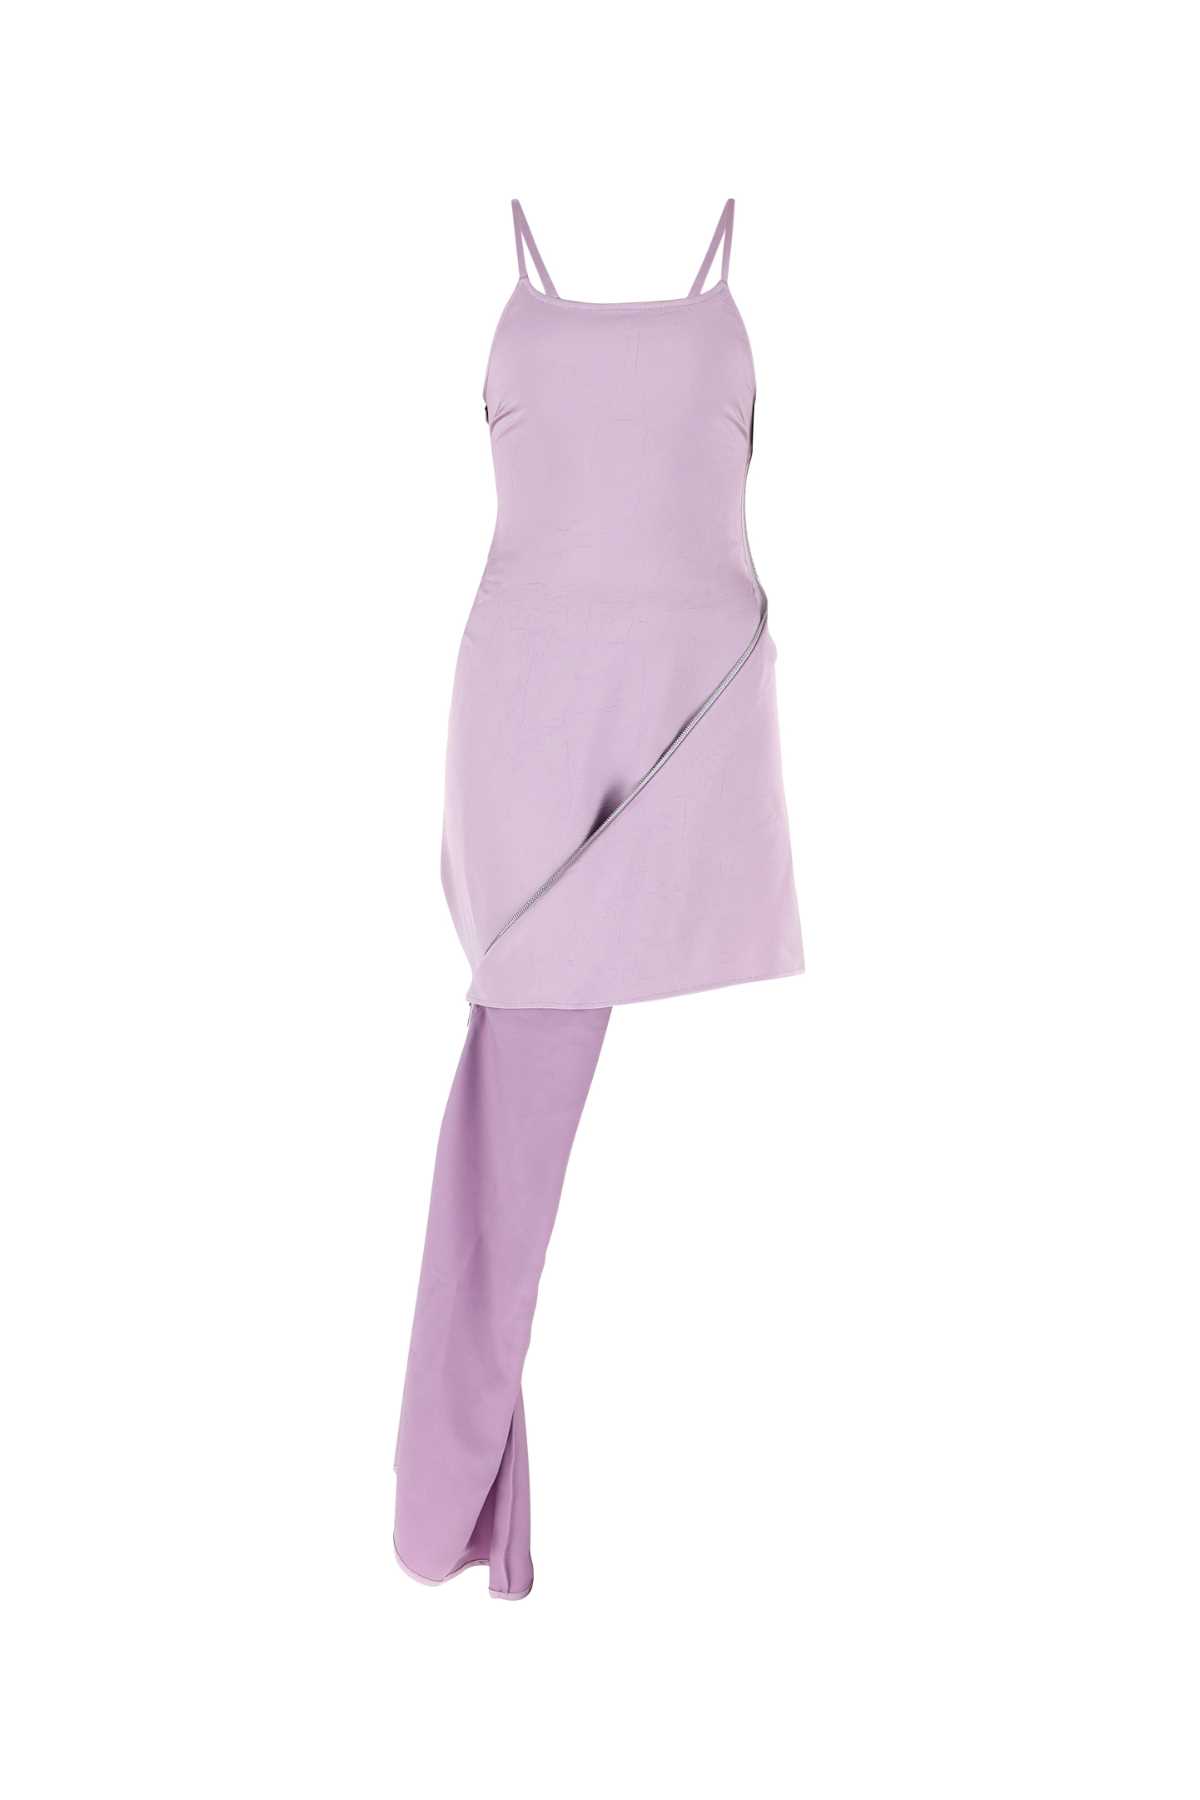 J.W. Anderson Lilac Satin Dress